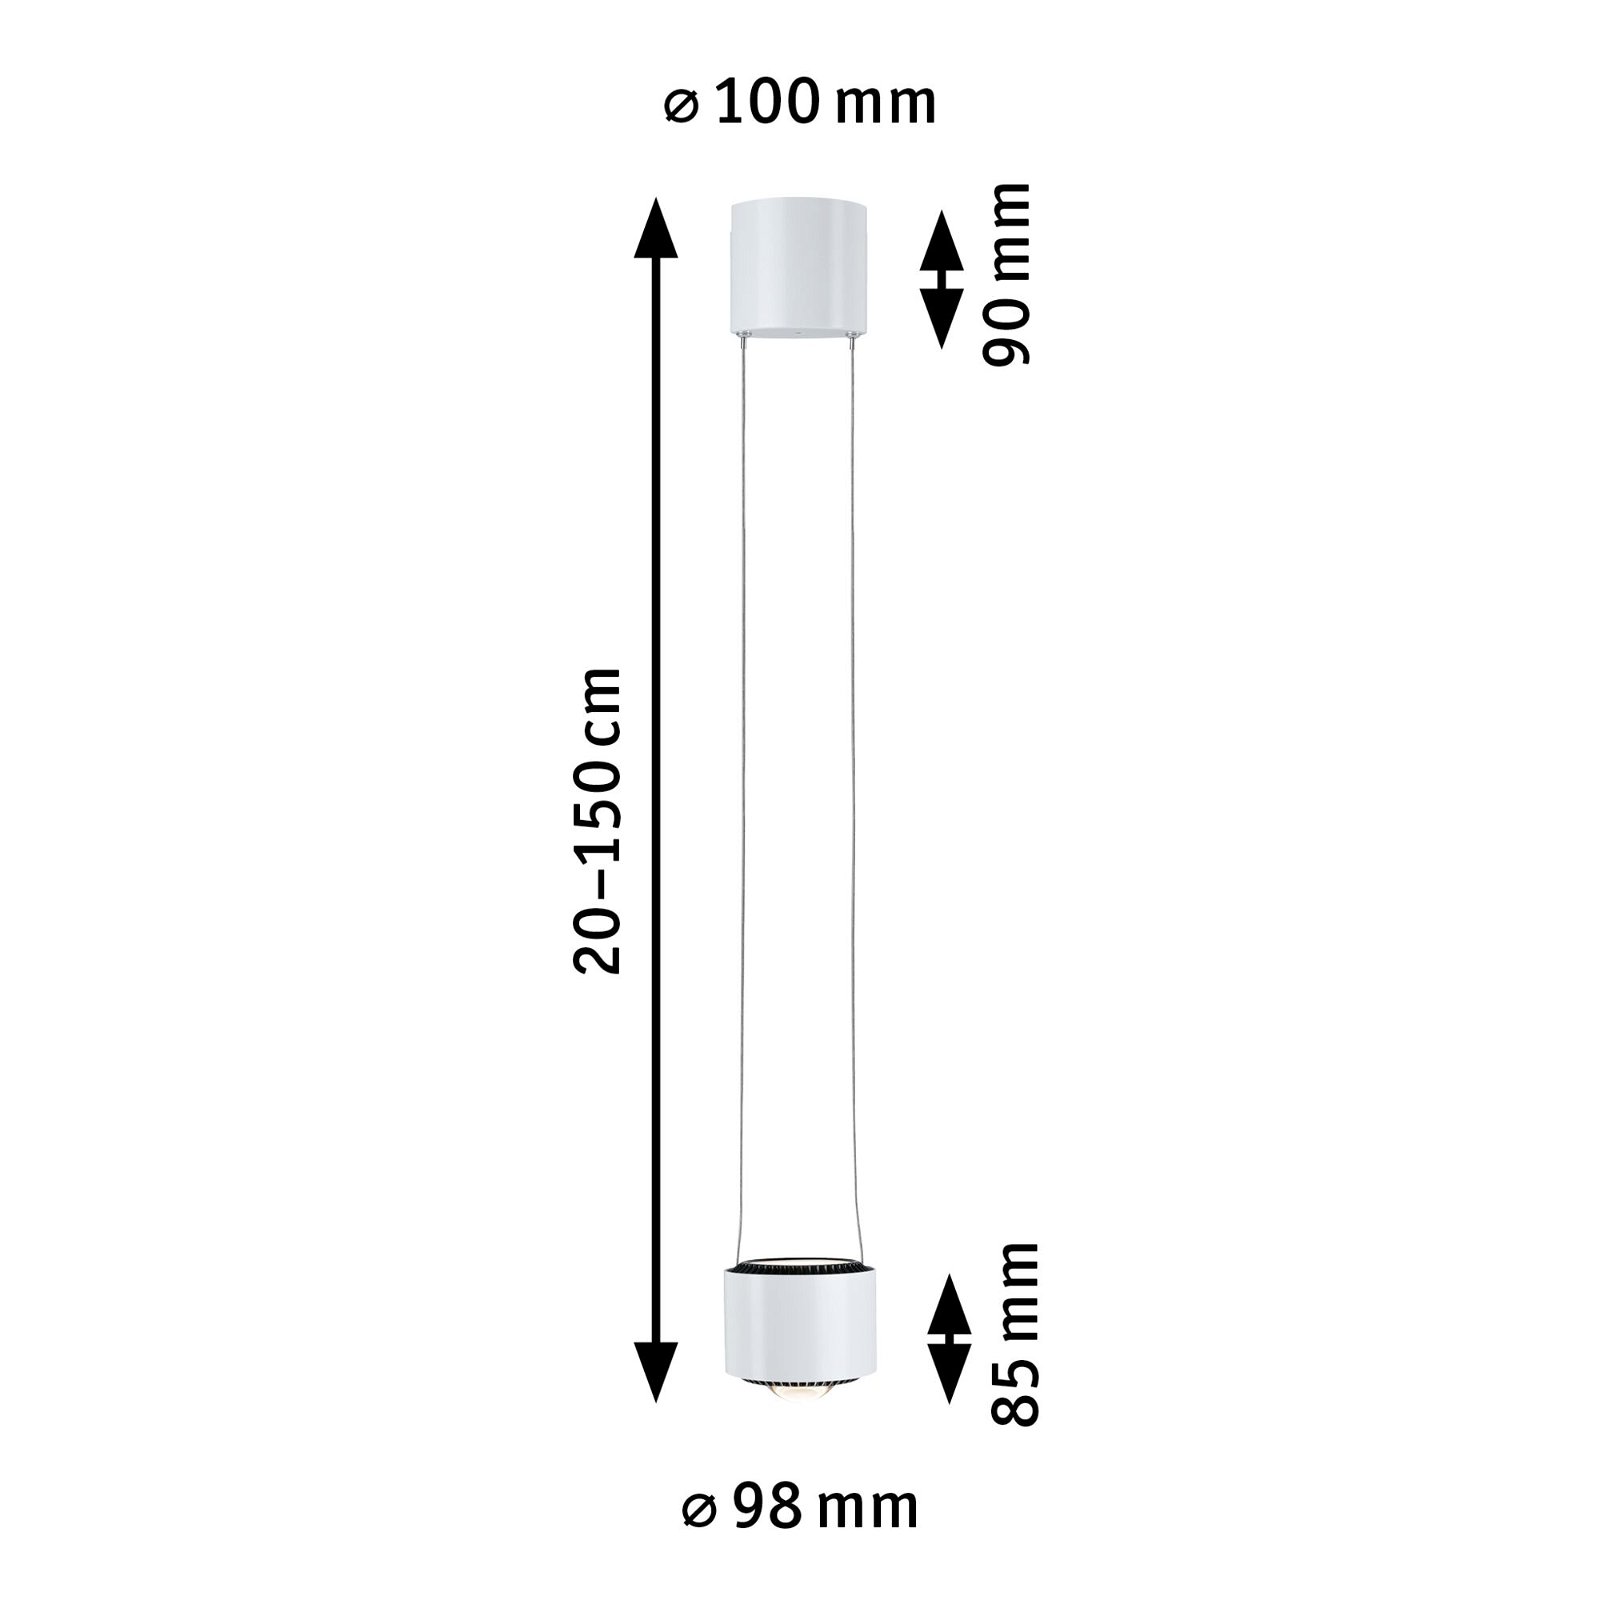 URail Suspension LED Aldan 860lm / 460lm 8,5 / 1x4,5W 2700K gradable 230V Blanc